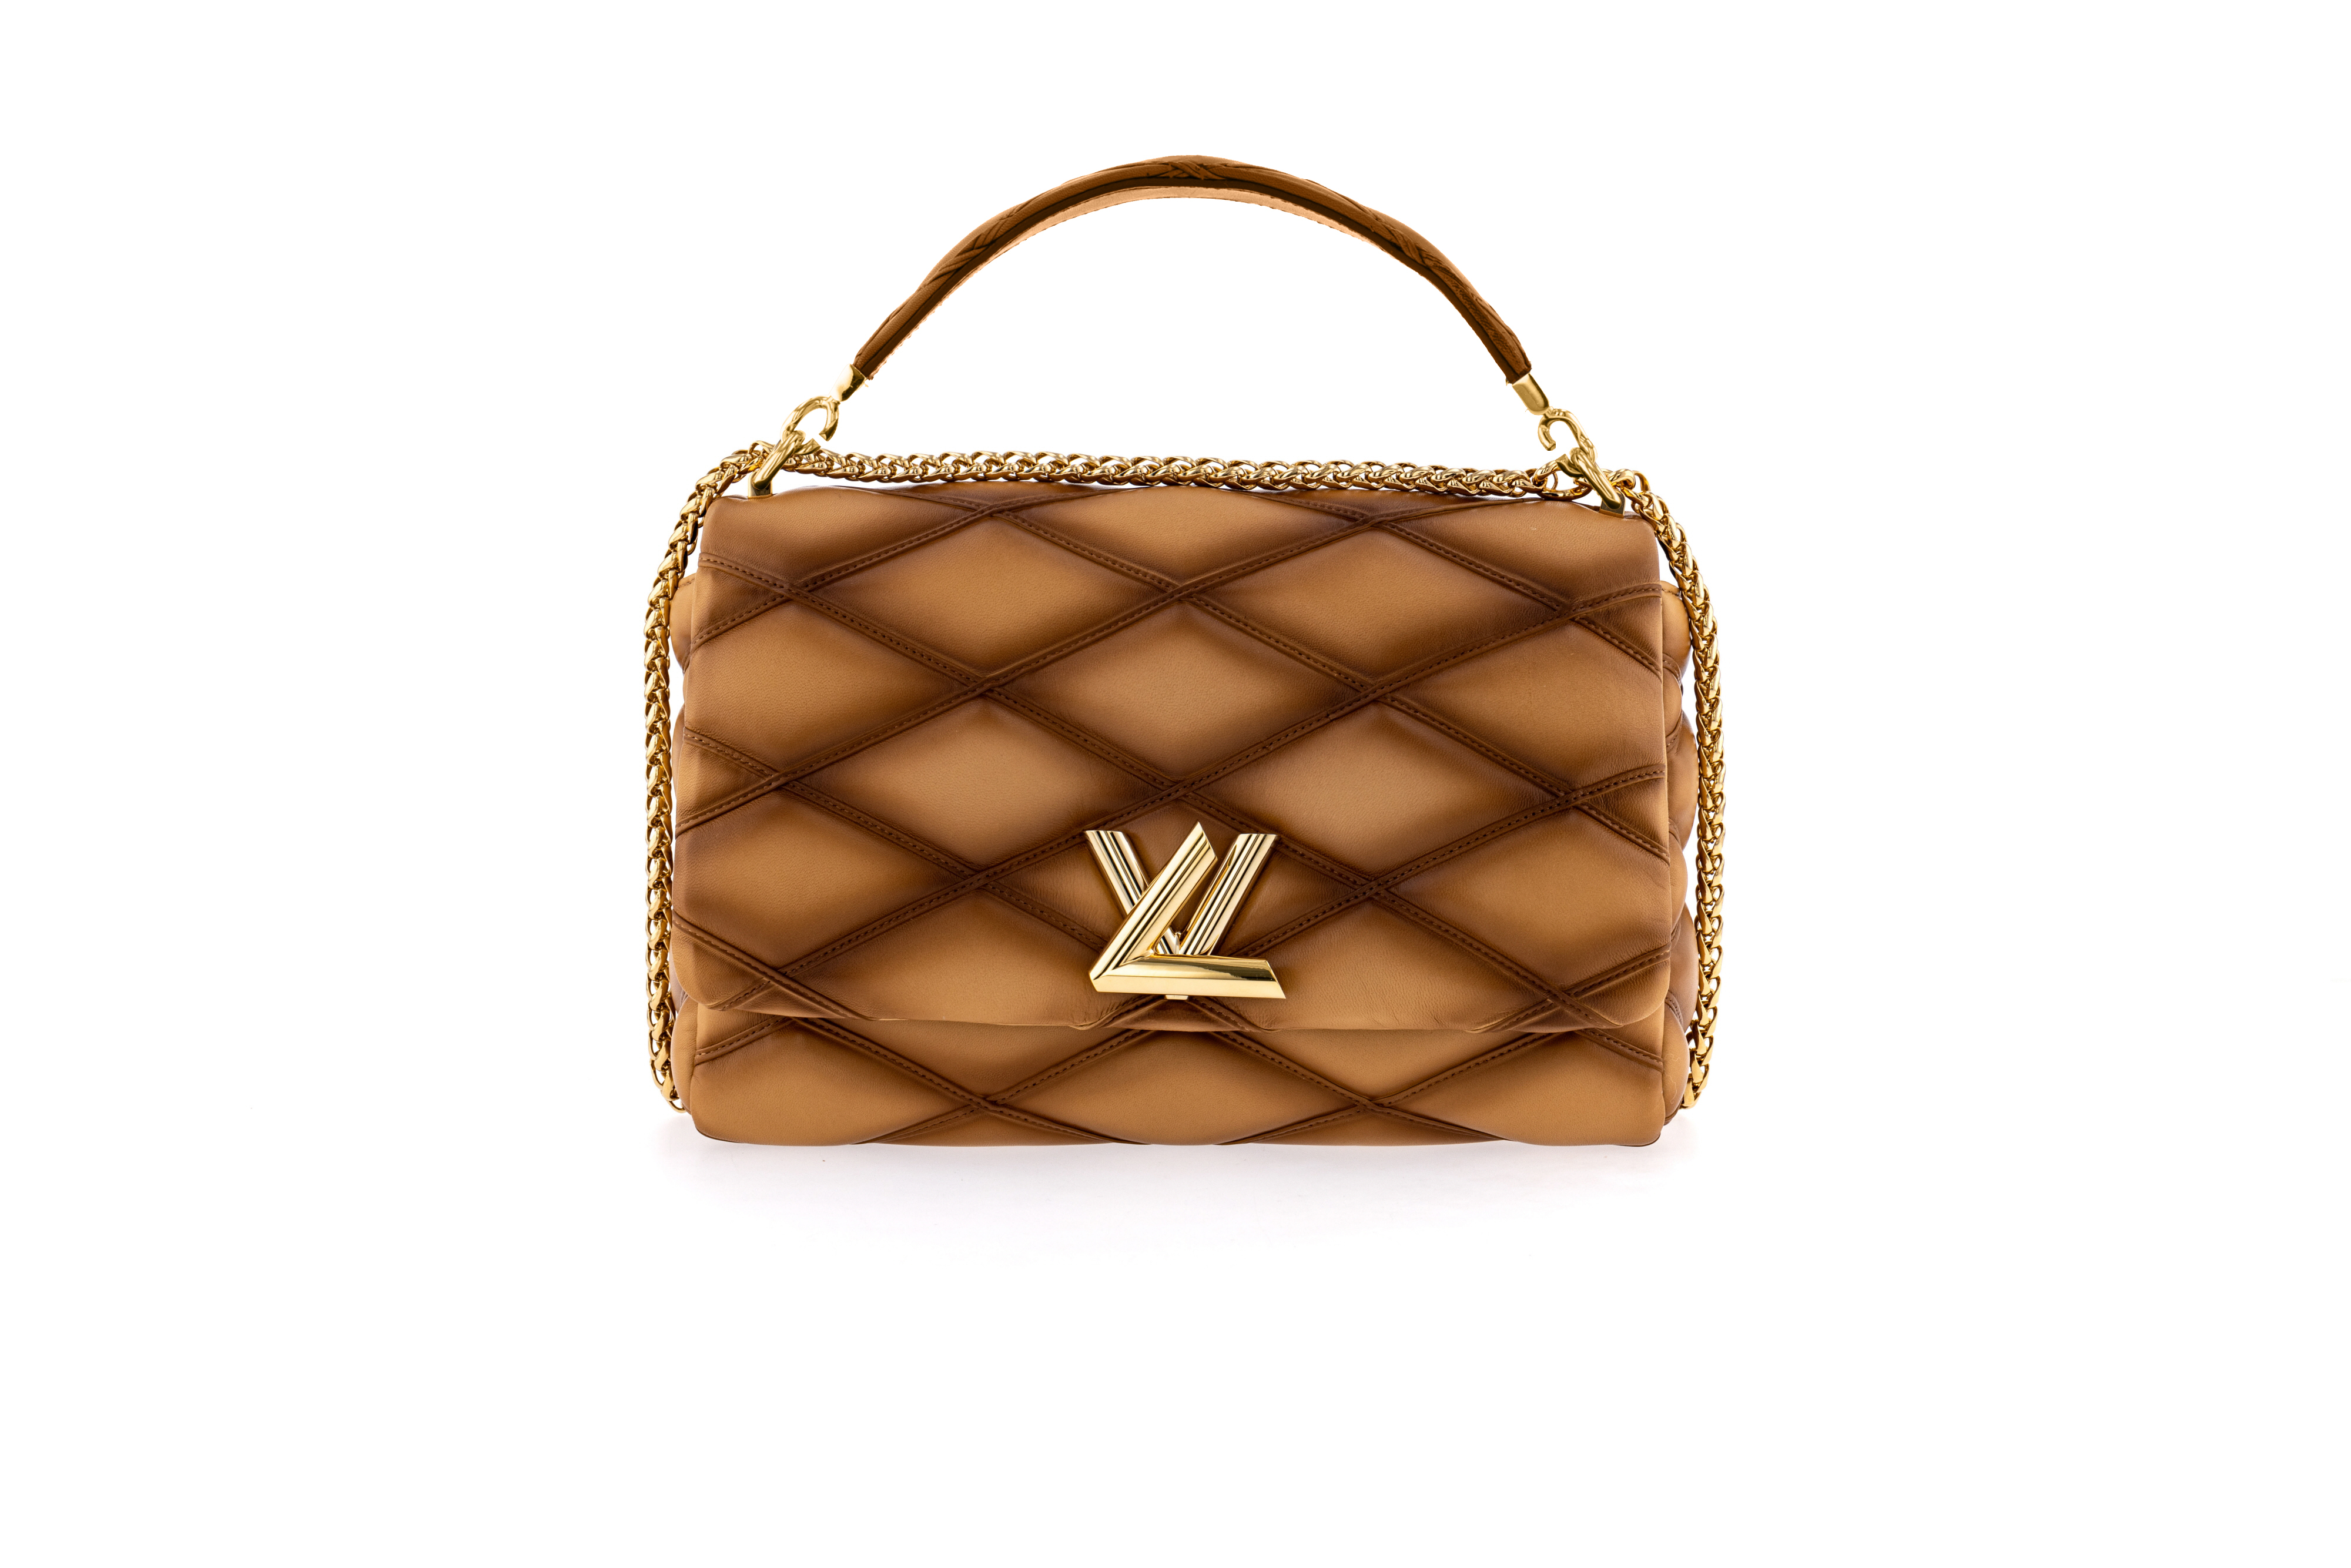 Louis Vuitton launches their new $4,300 “Volta” handbag - Luxurylaunches